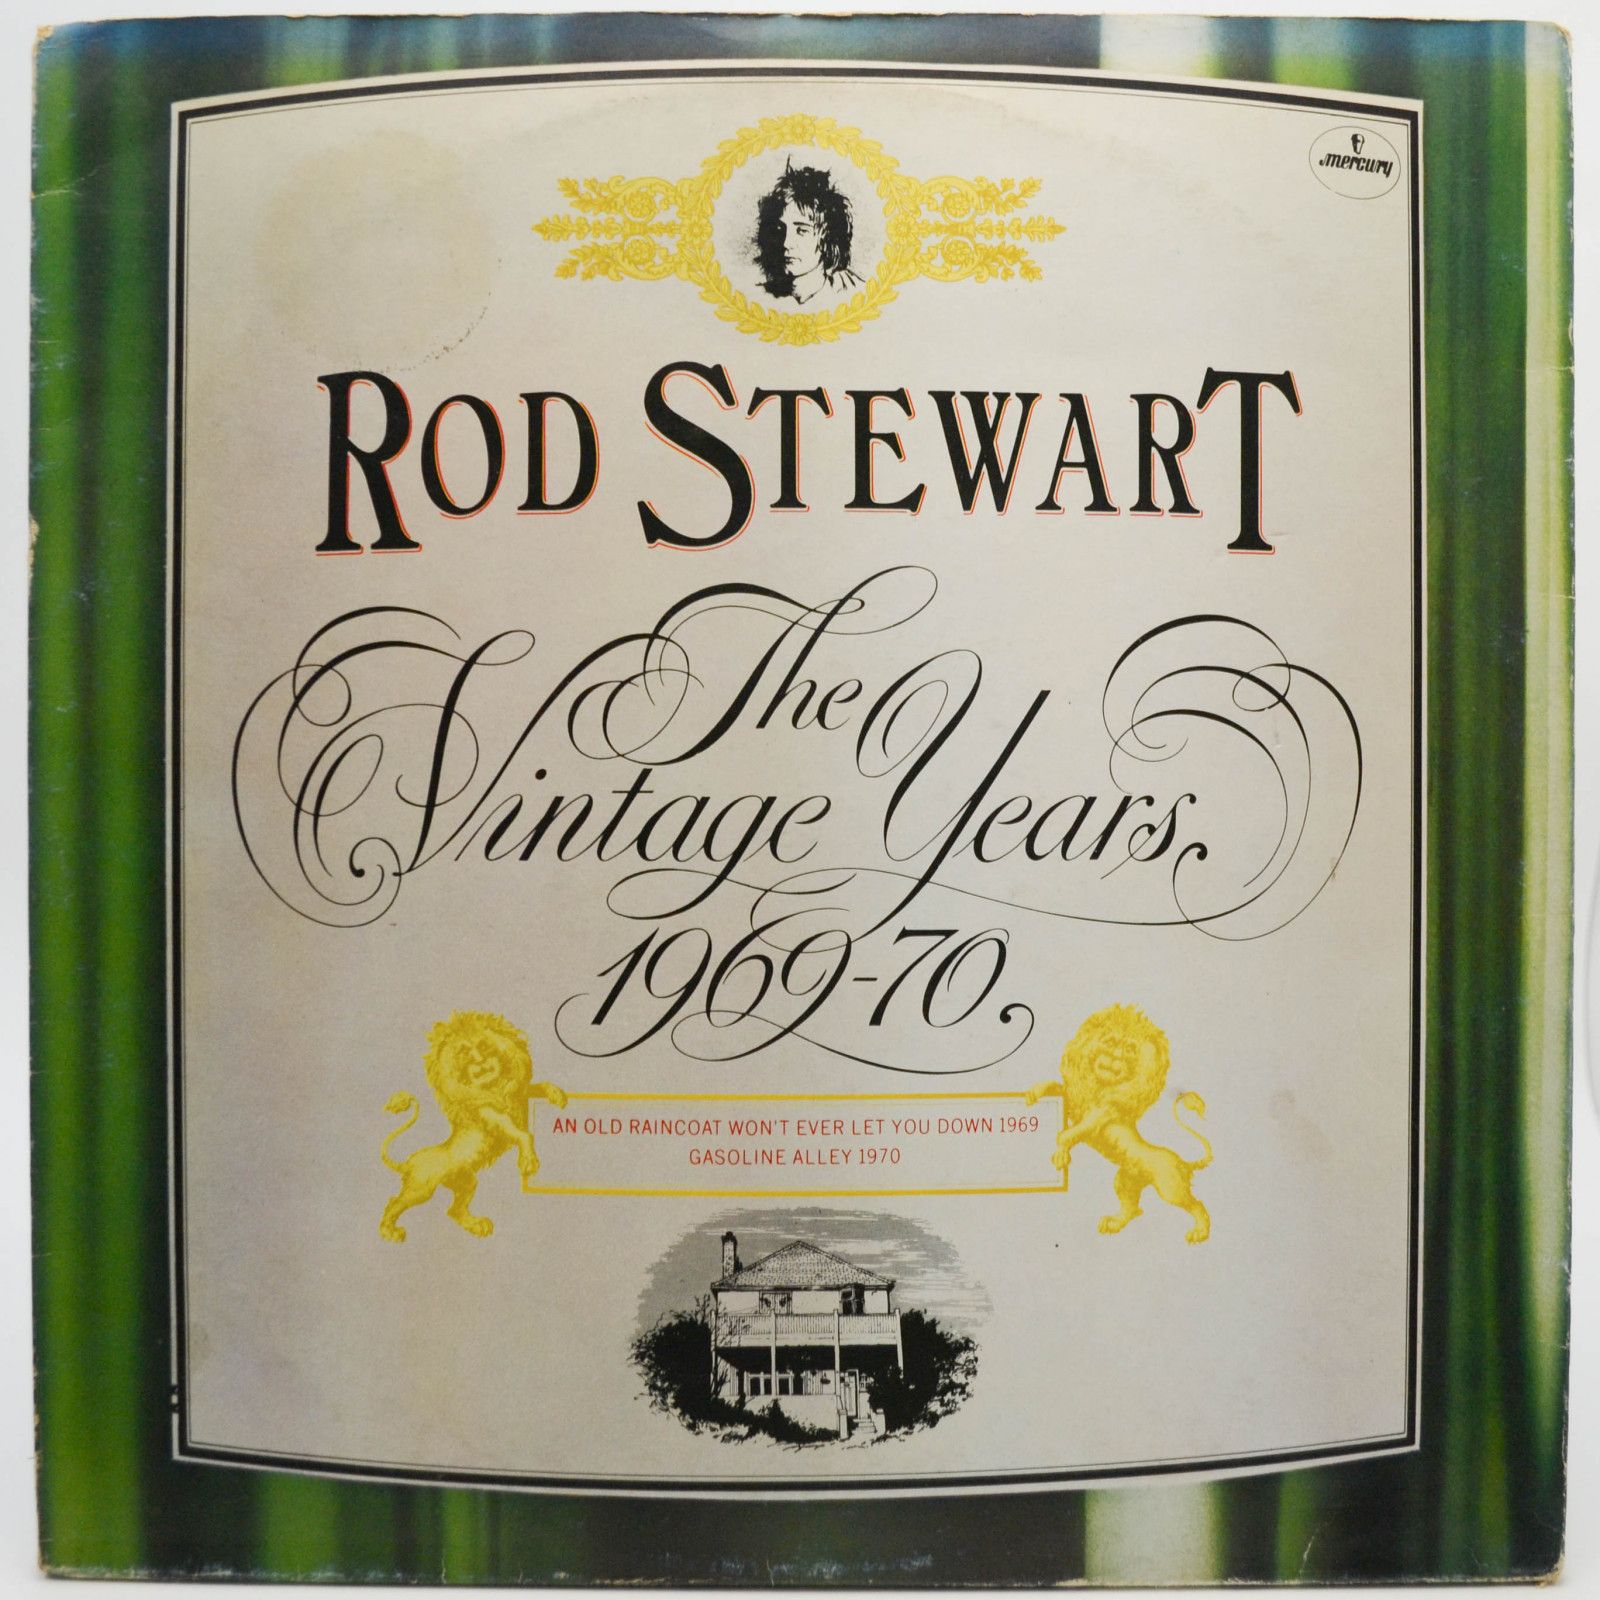 Rod Stewart — The Vintage Years 1969-70 (2LP), 1976